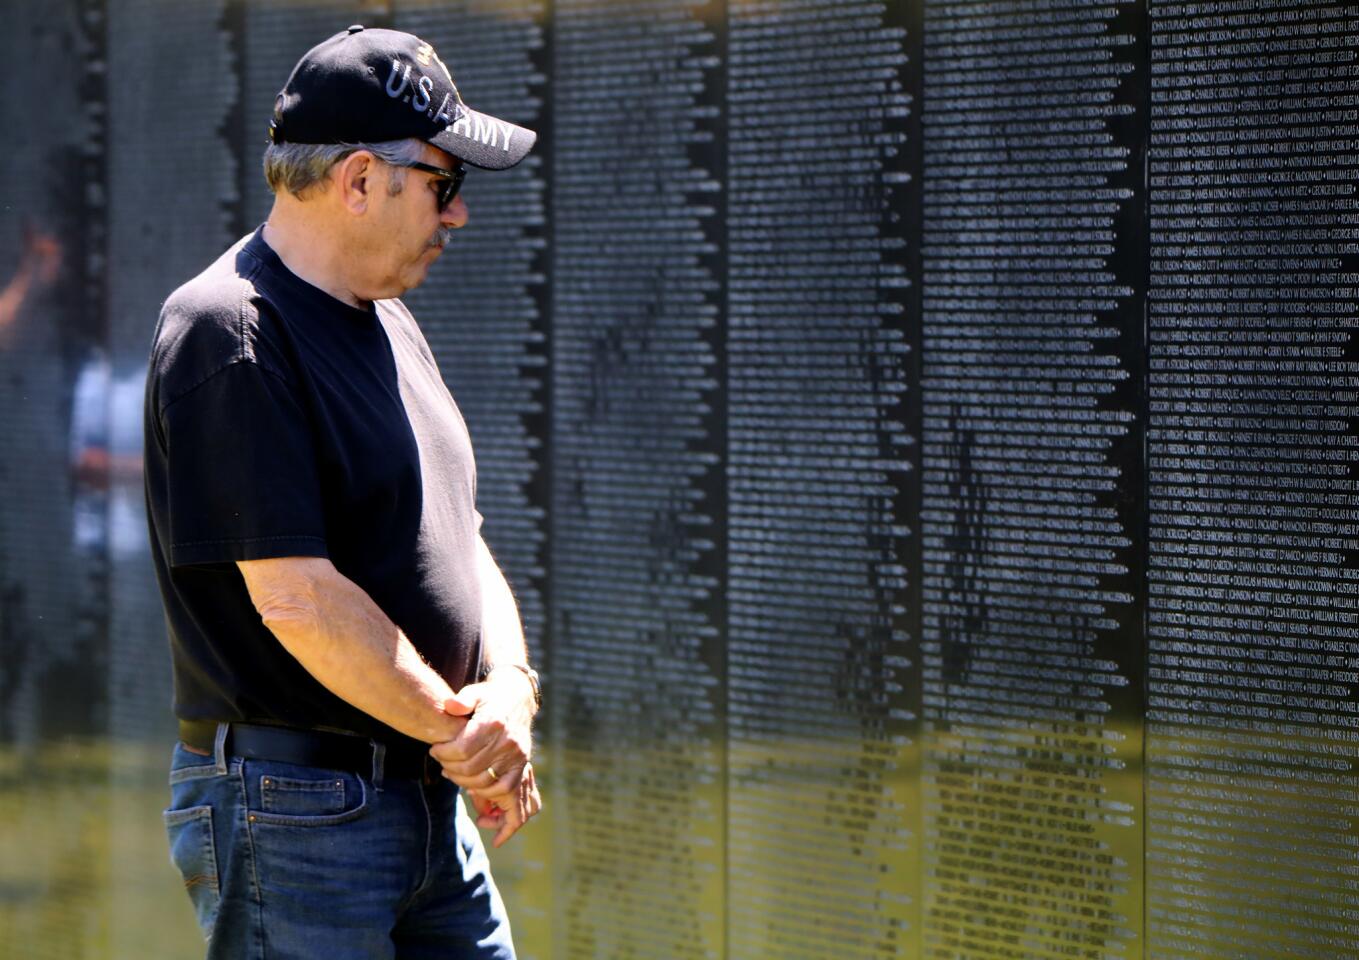 Photo Gallery: Replica Vietnam War Memorial Wall comes to Costa Mesa